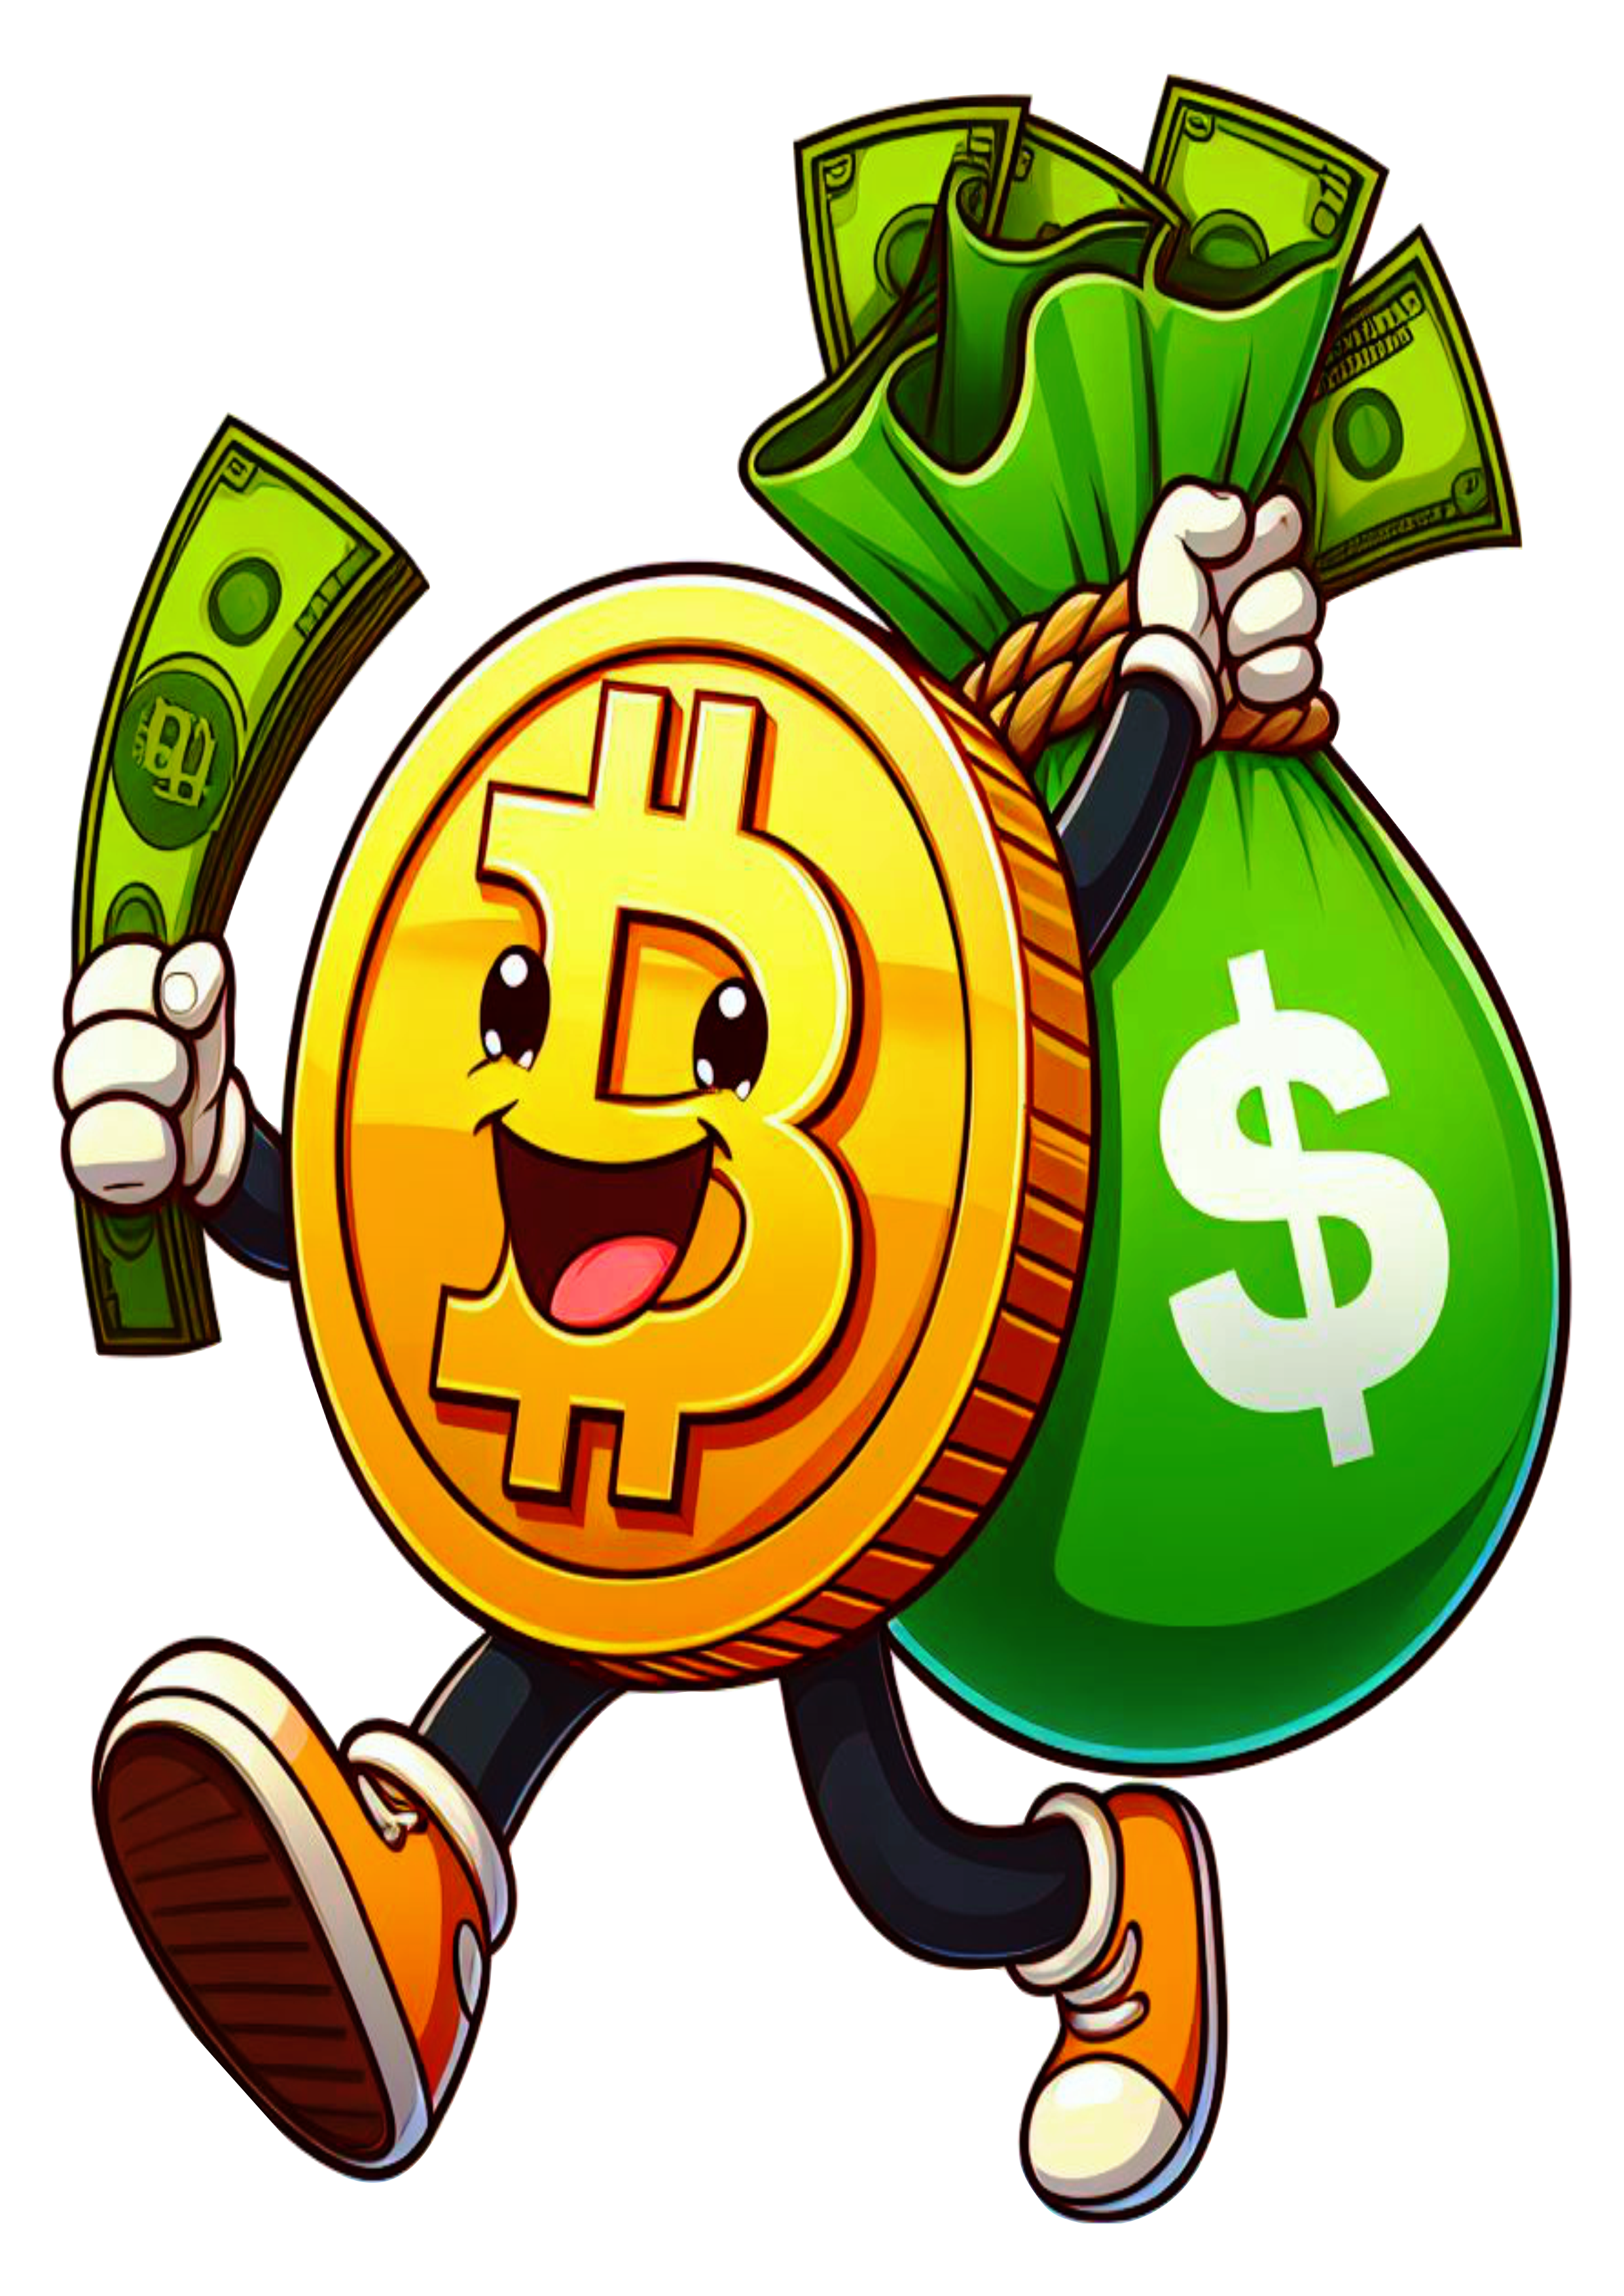 Dinheiro online bitcoin png investimento